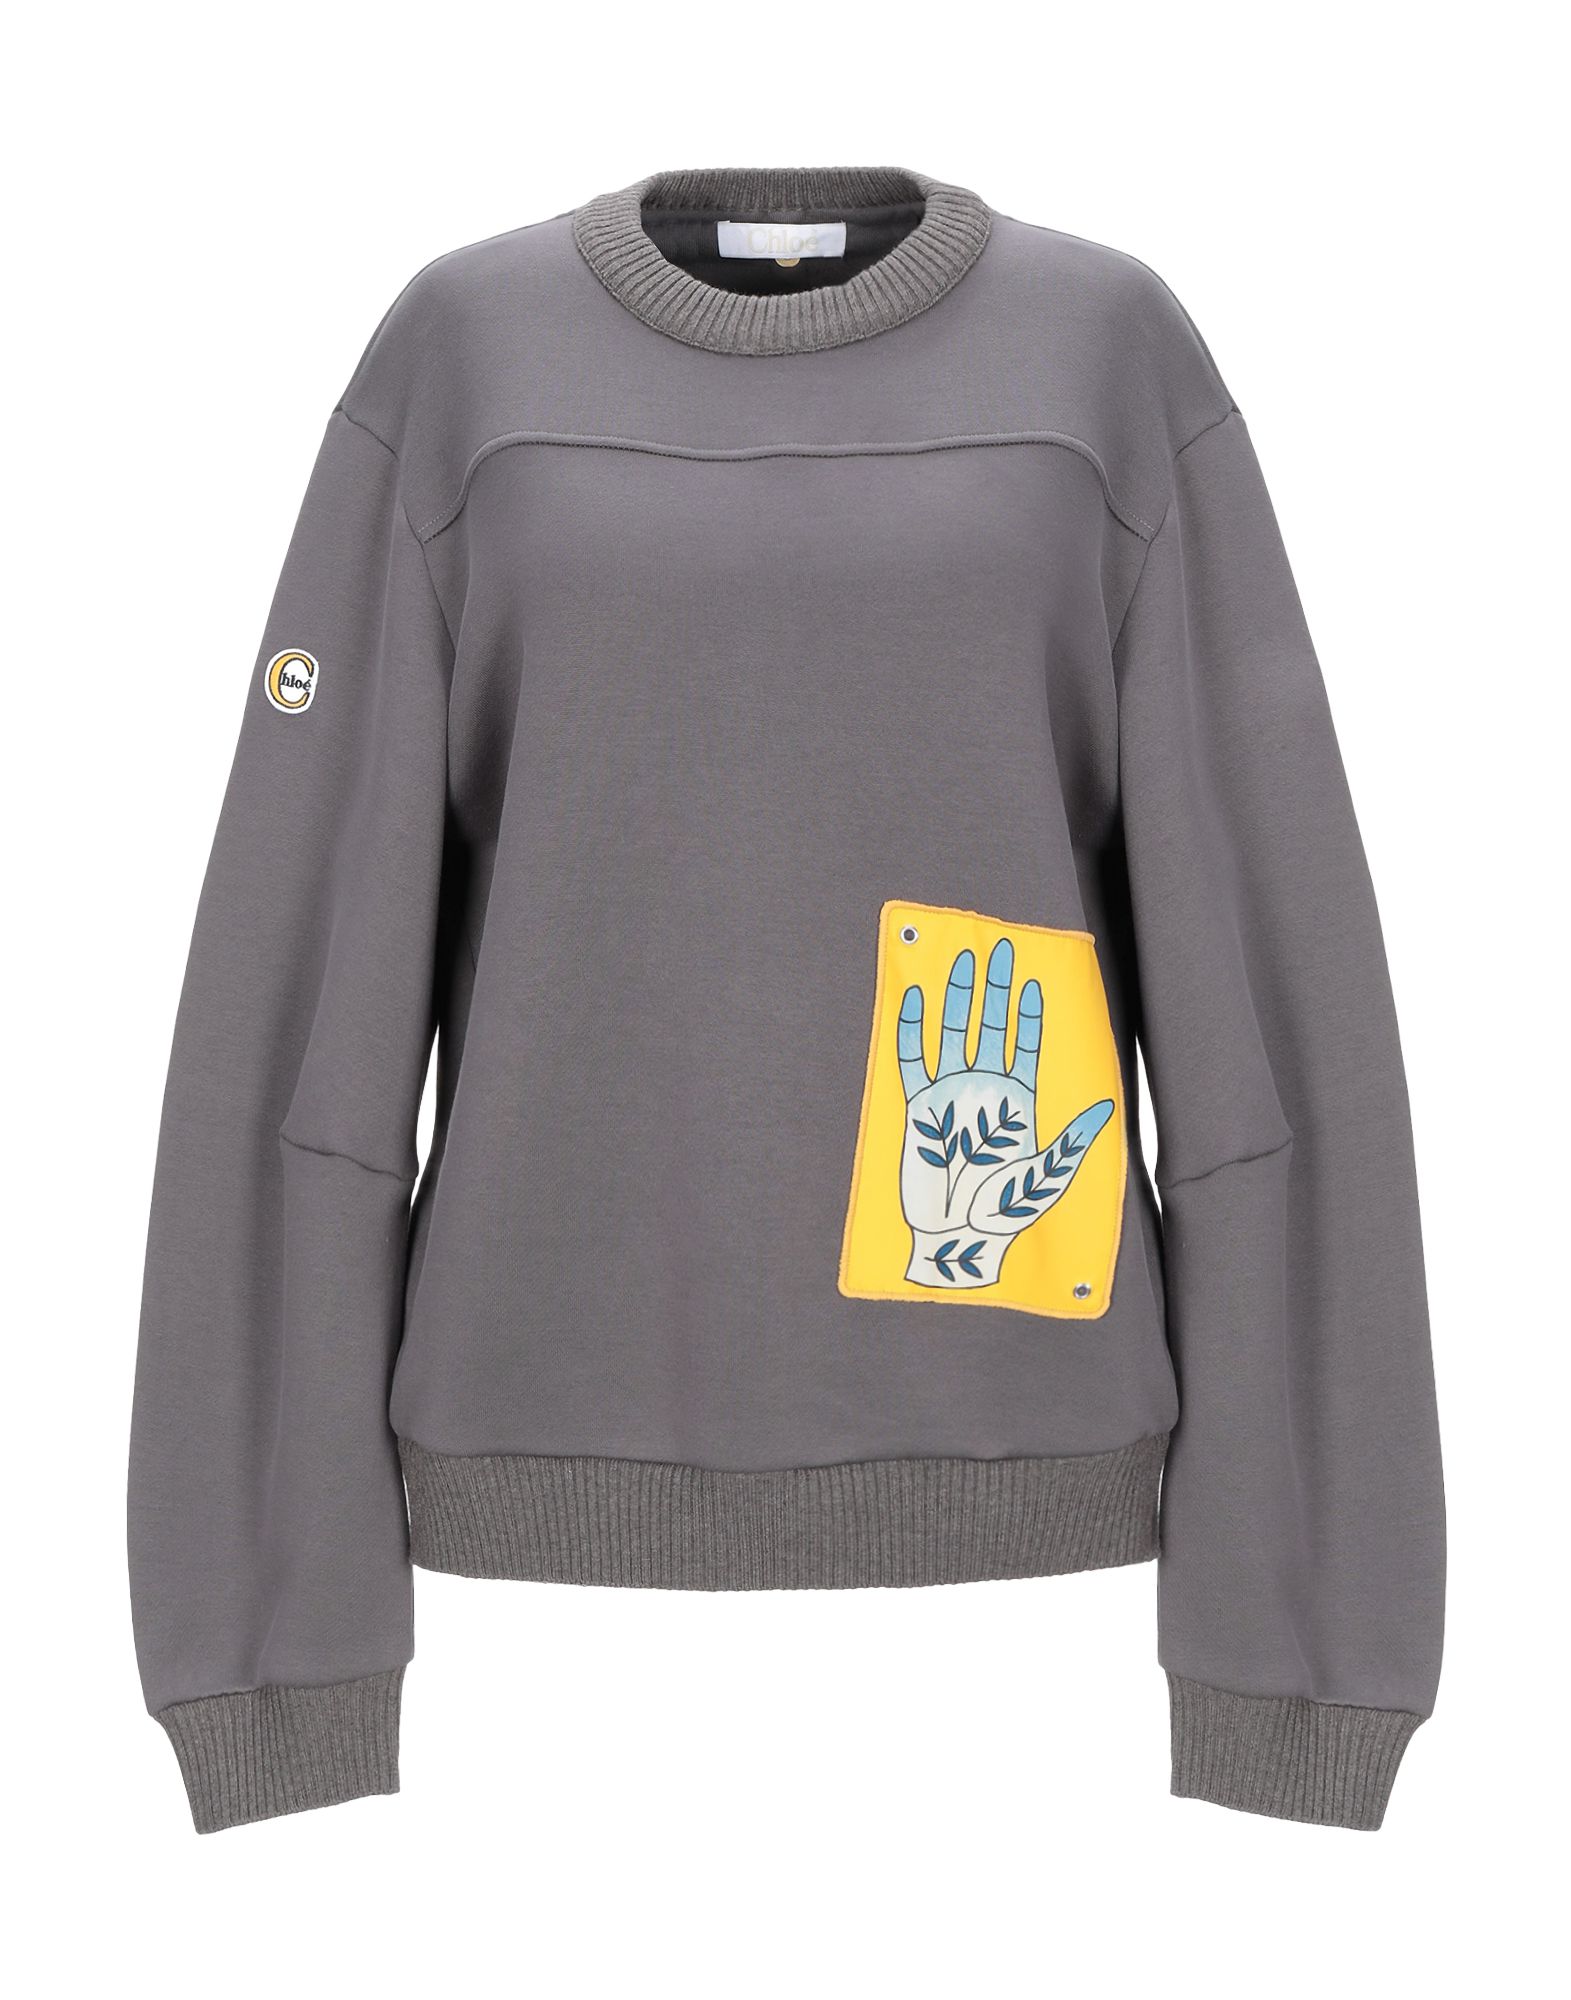 CHLOÉ Sweatshirts - Item 12345204